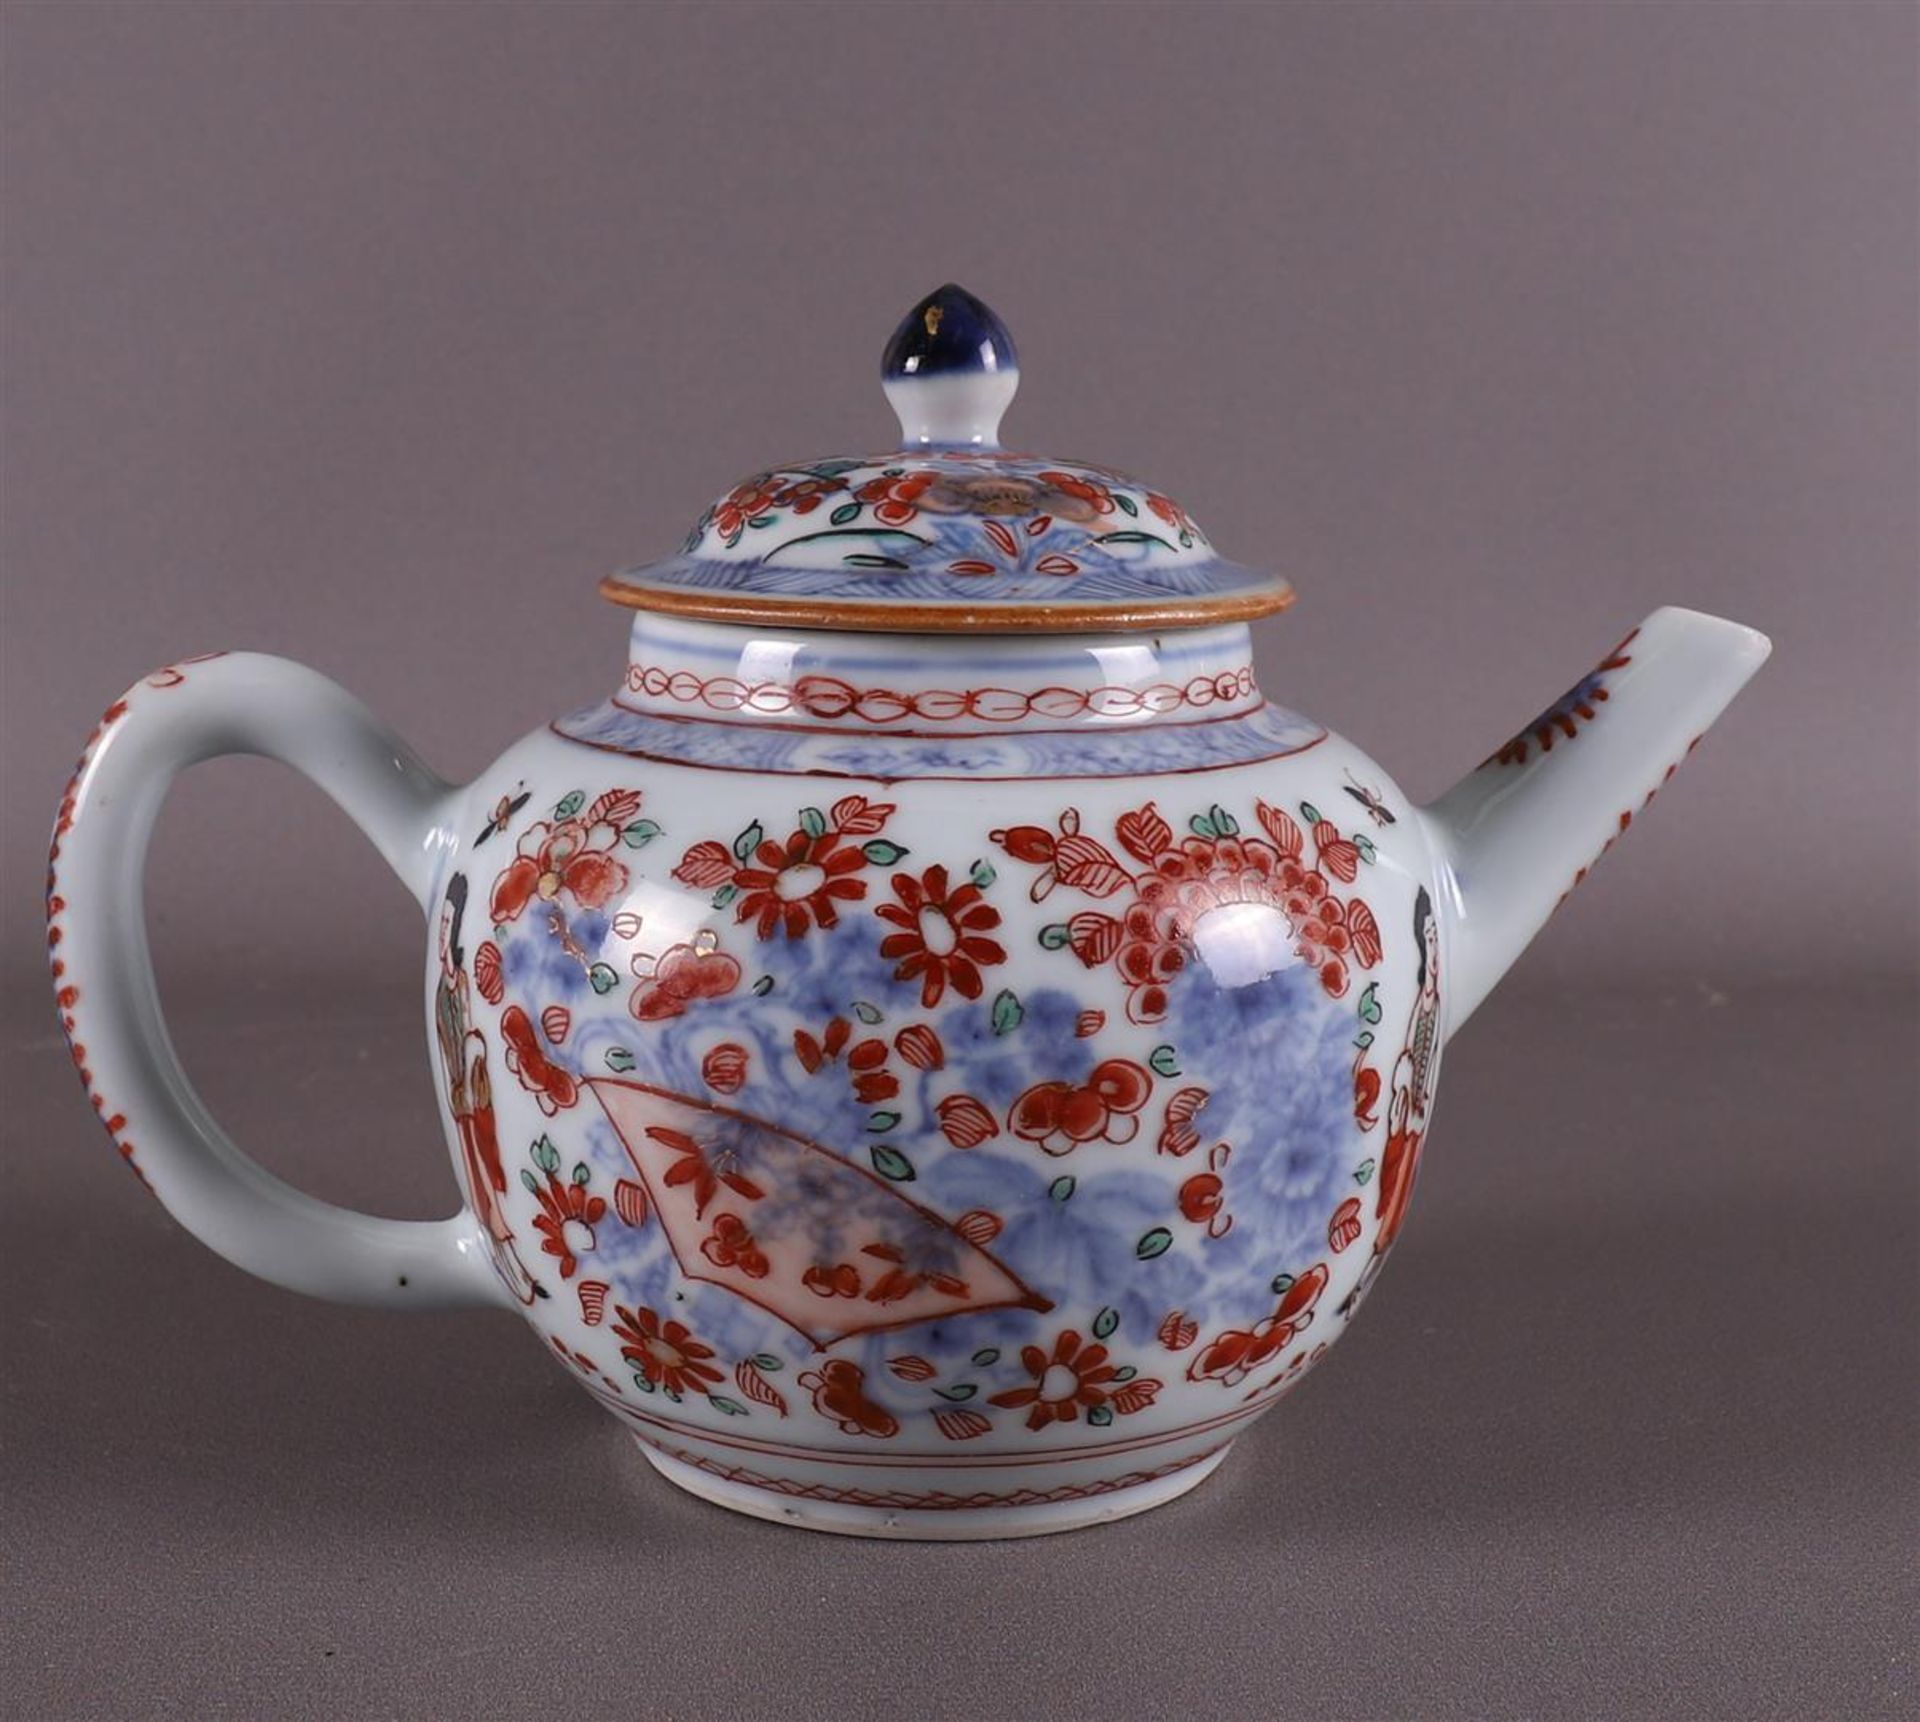 A spherical porcelain Amsterdam variegated teapot, China, 18th century. Polychrome decoration of a - Bild 2 aus 13